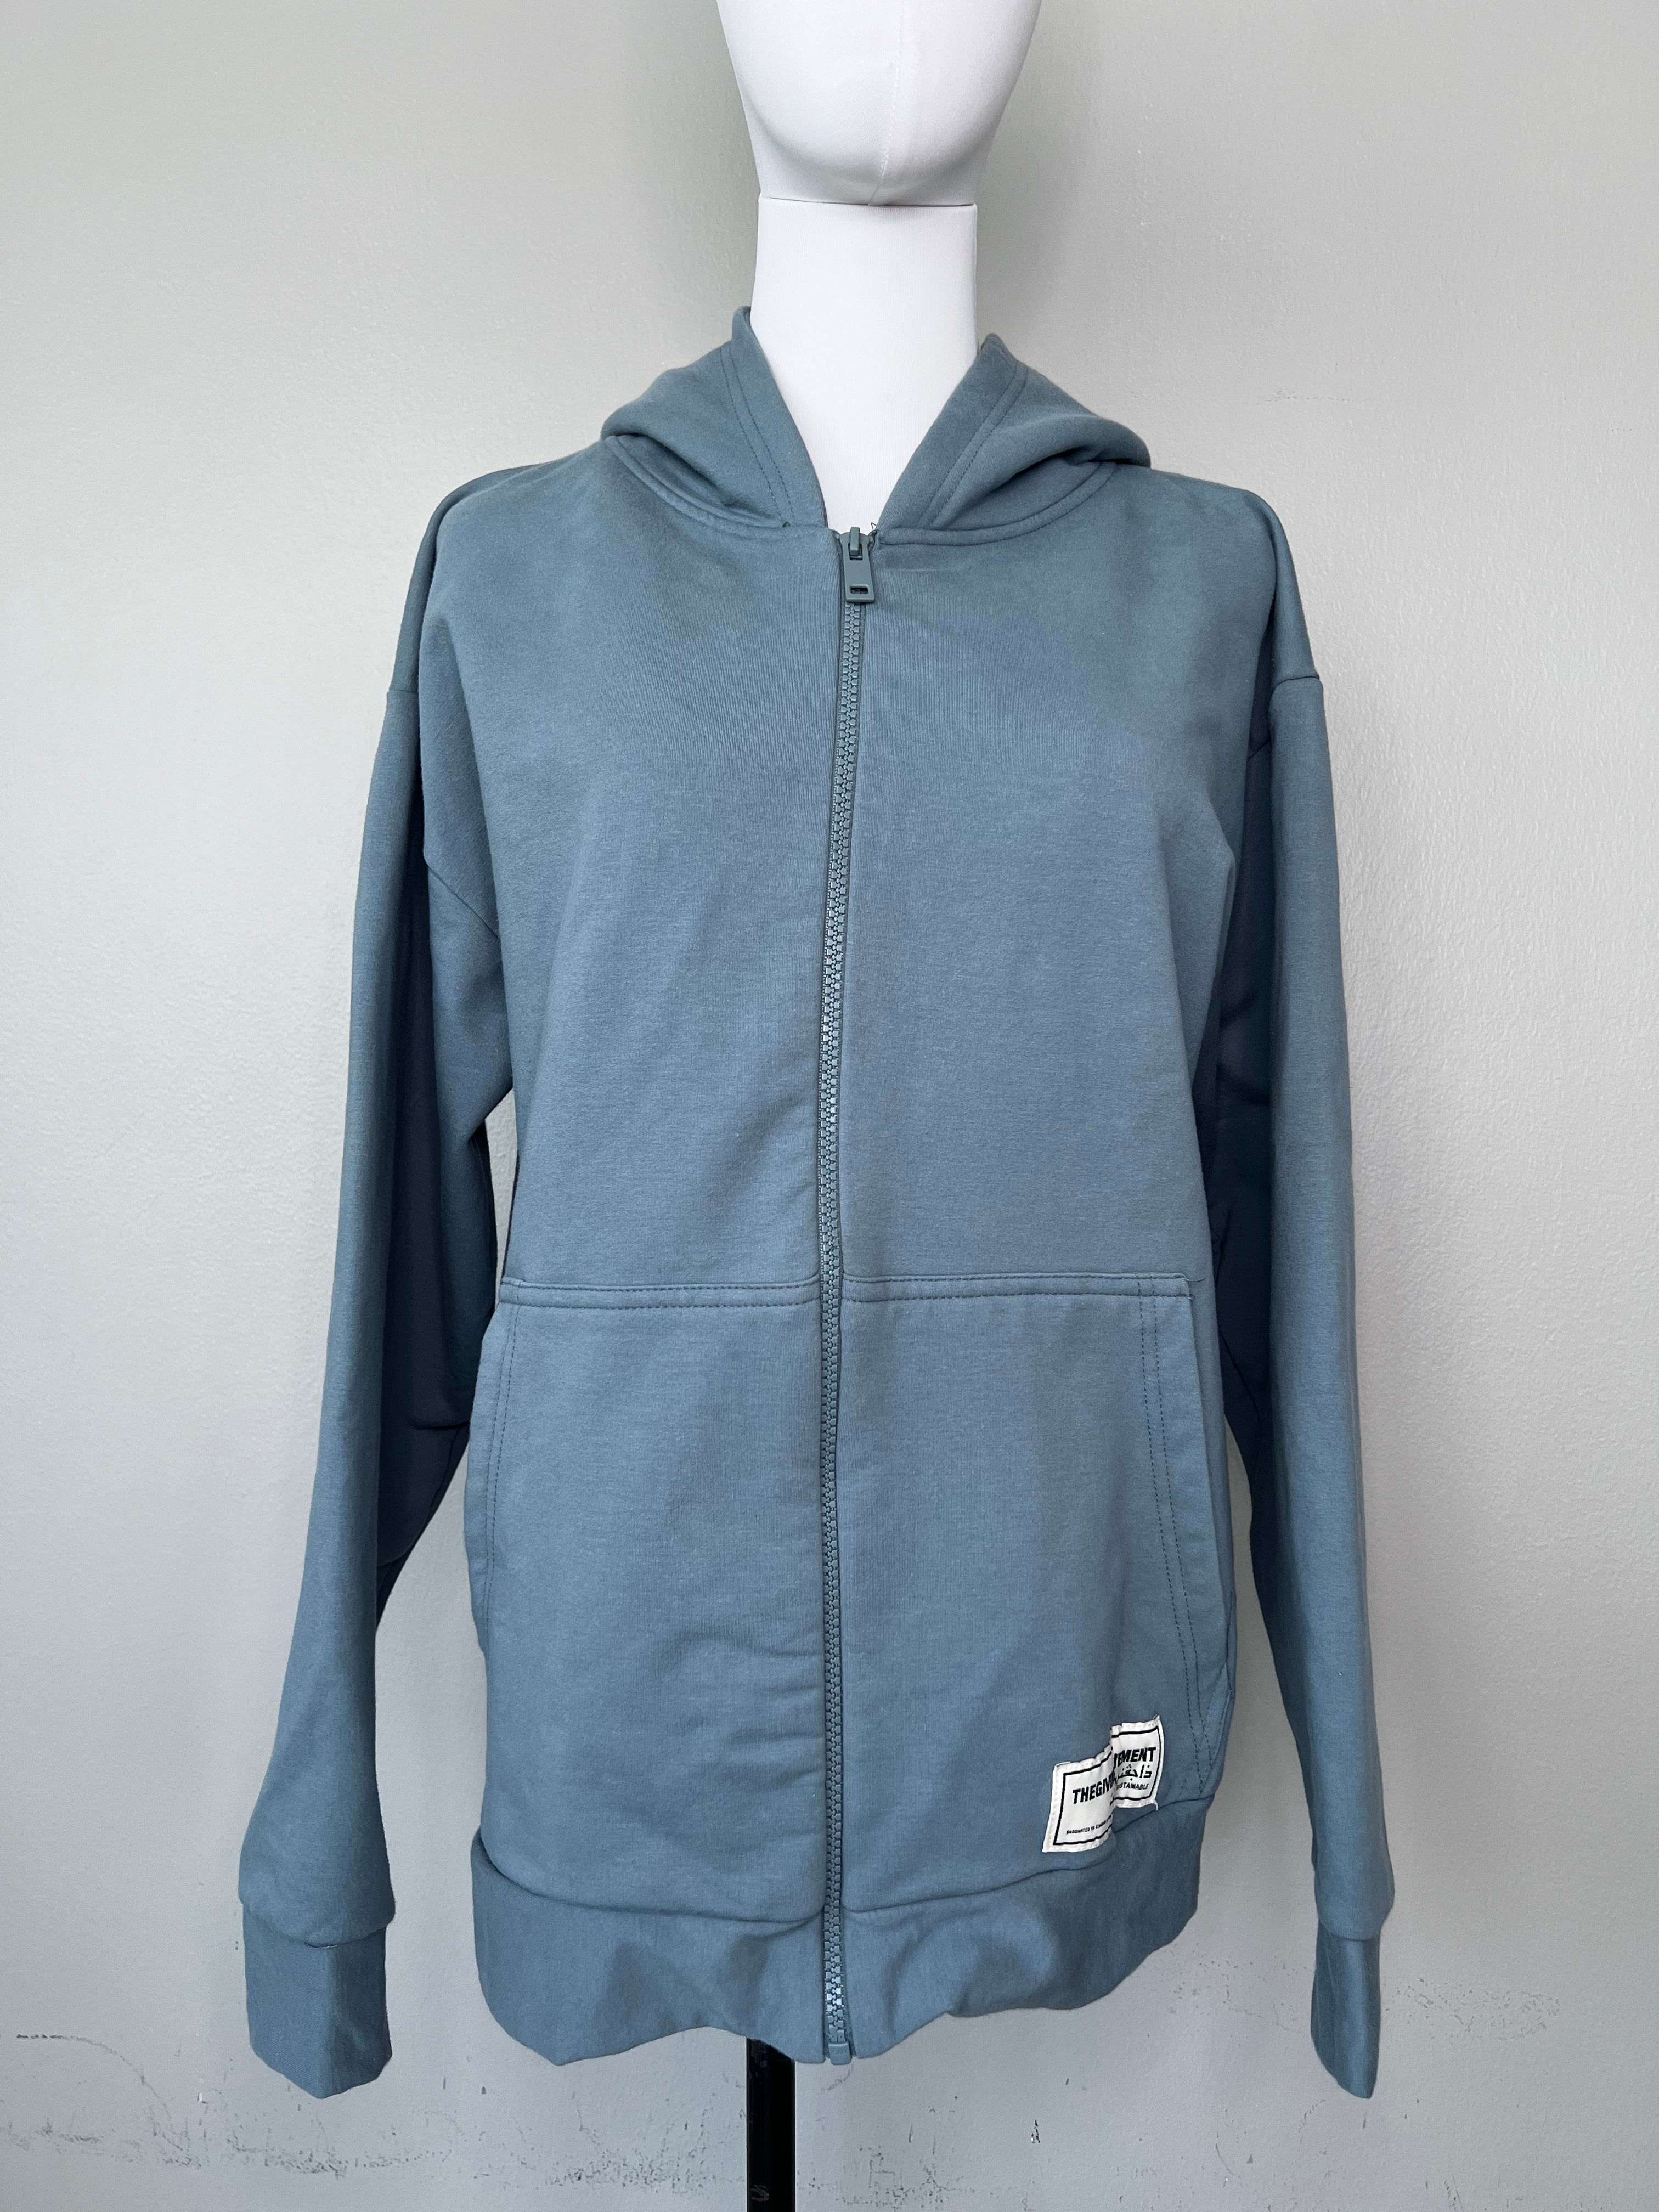 Cyan blue "Limited Edition Hoody" 1/100 zip-up jacket - THEGIVINGMOVEMENT